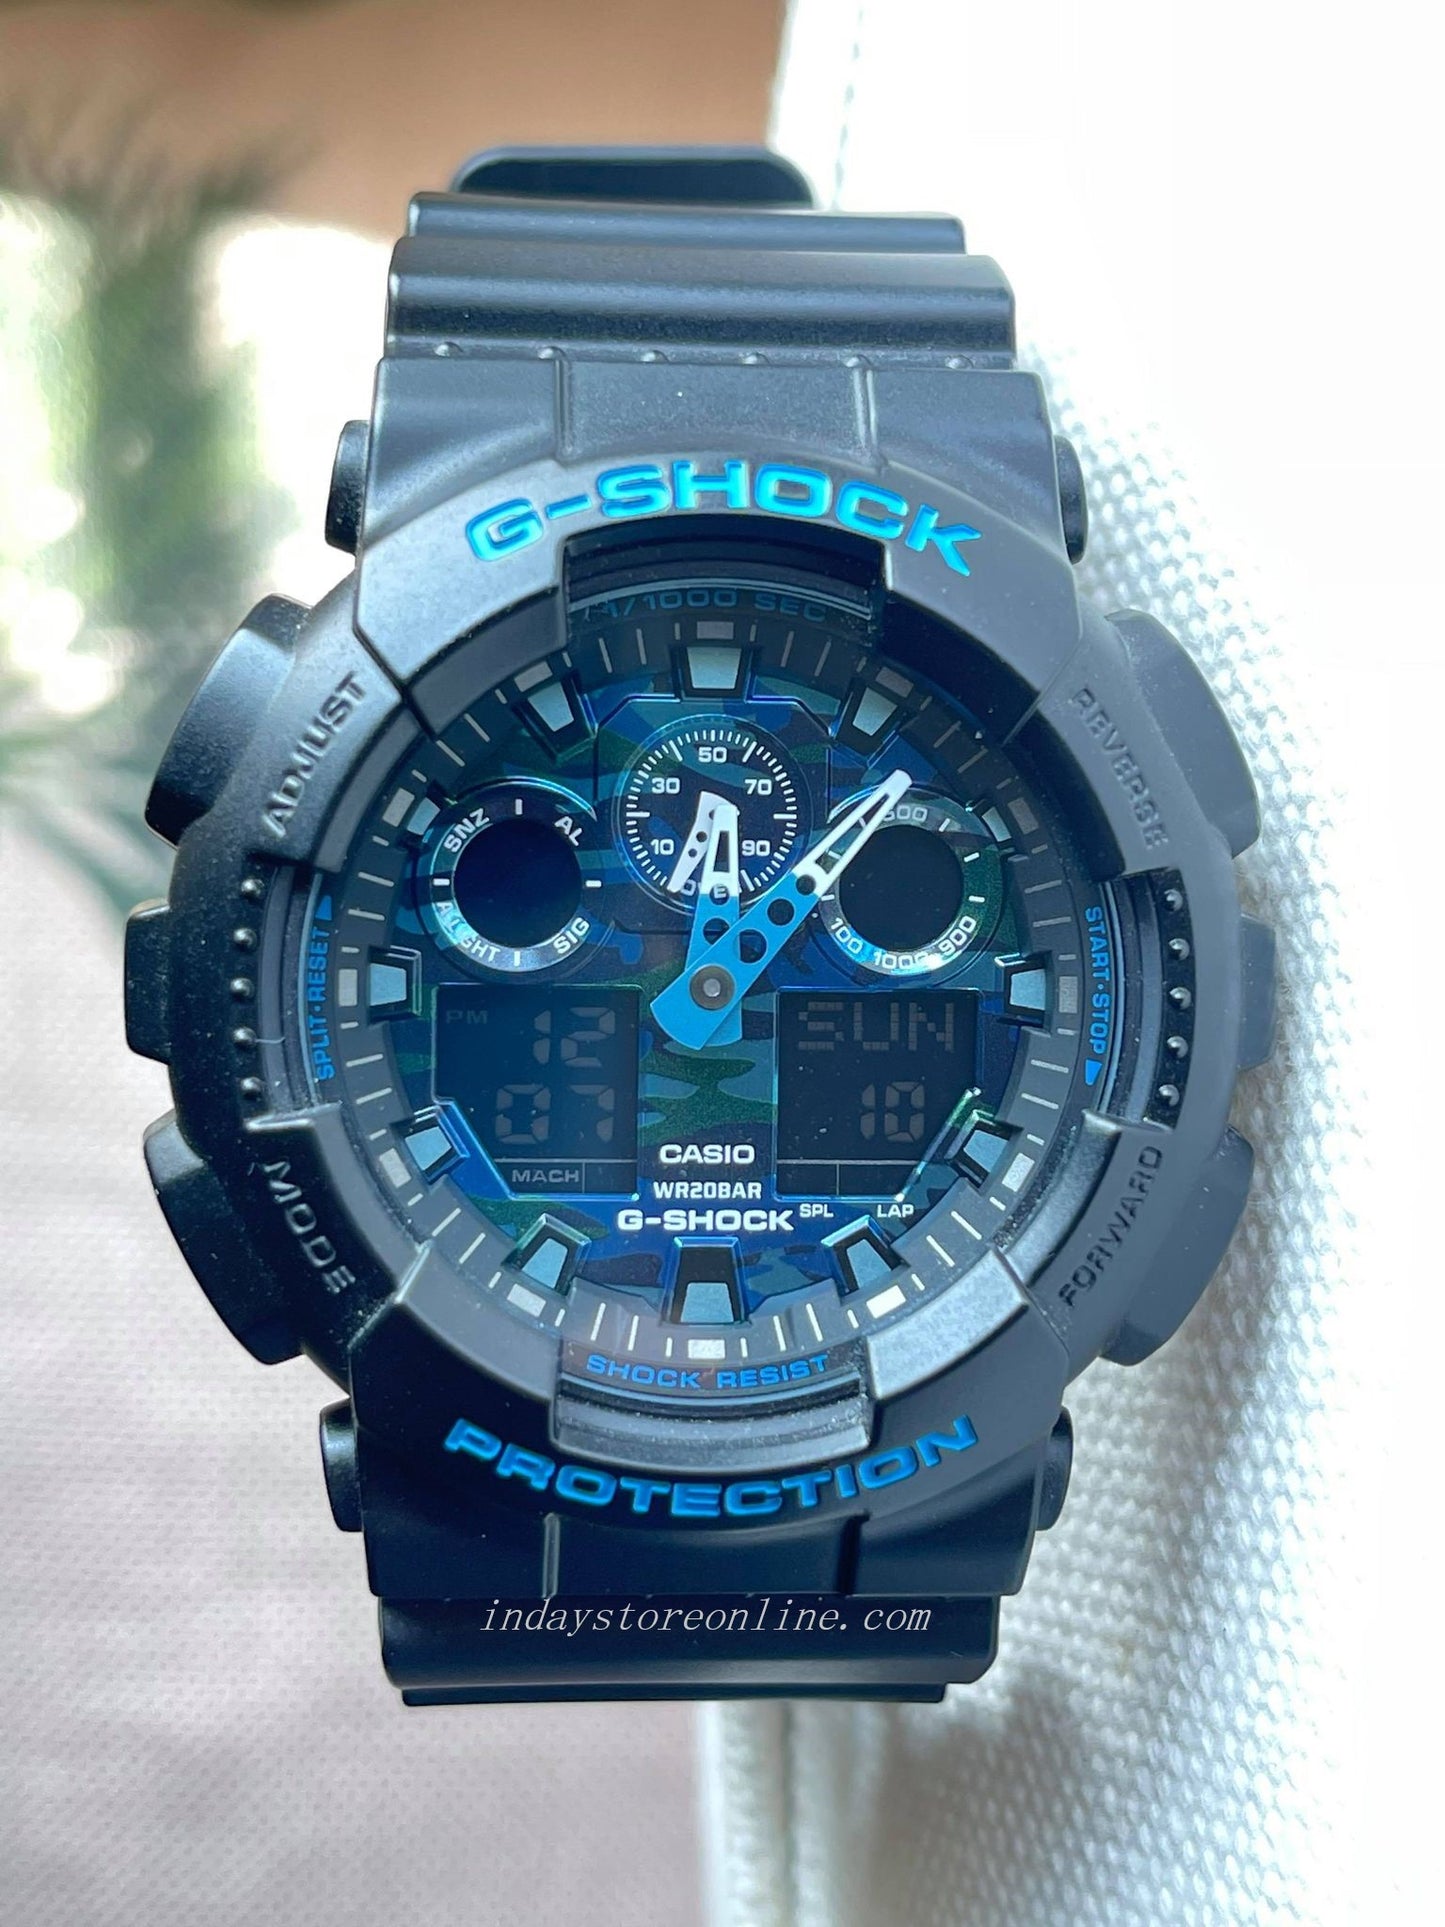 Casio G-Shock Men's Watch GA-100CB-1A